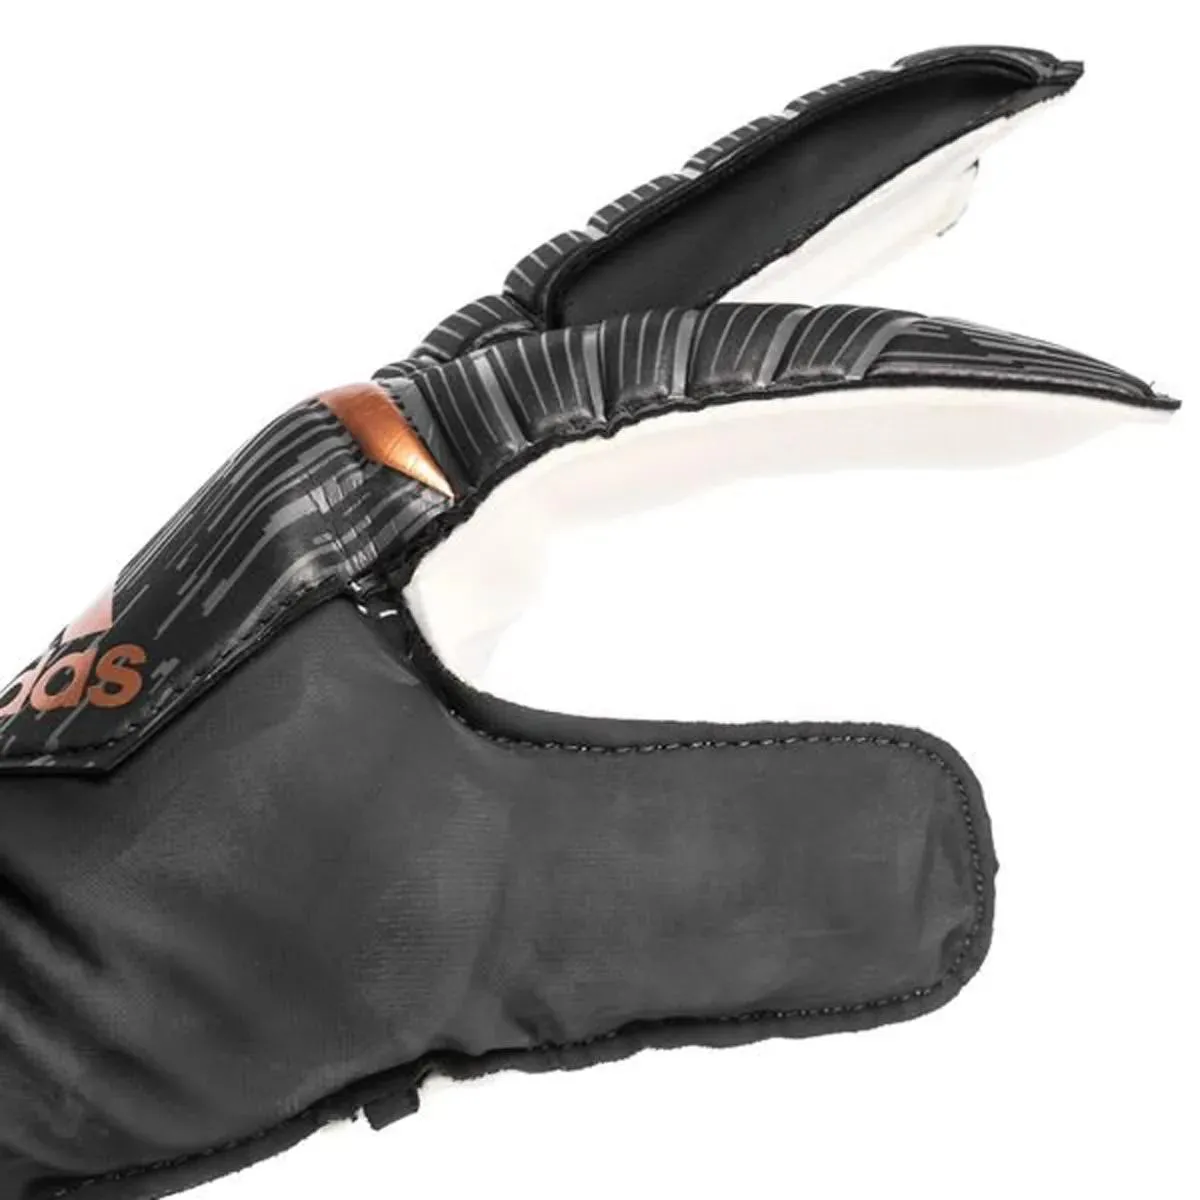 adidas Golmanske rukavice PRE JUNIOR BLACK/SOLRED/COPGOL 